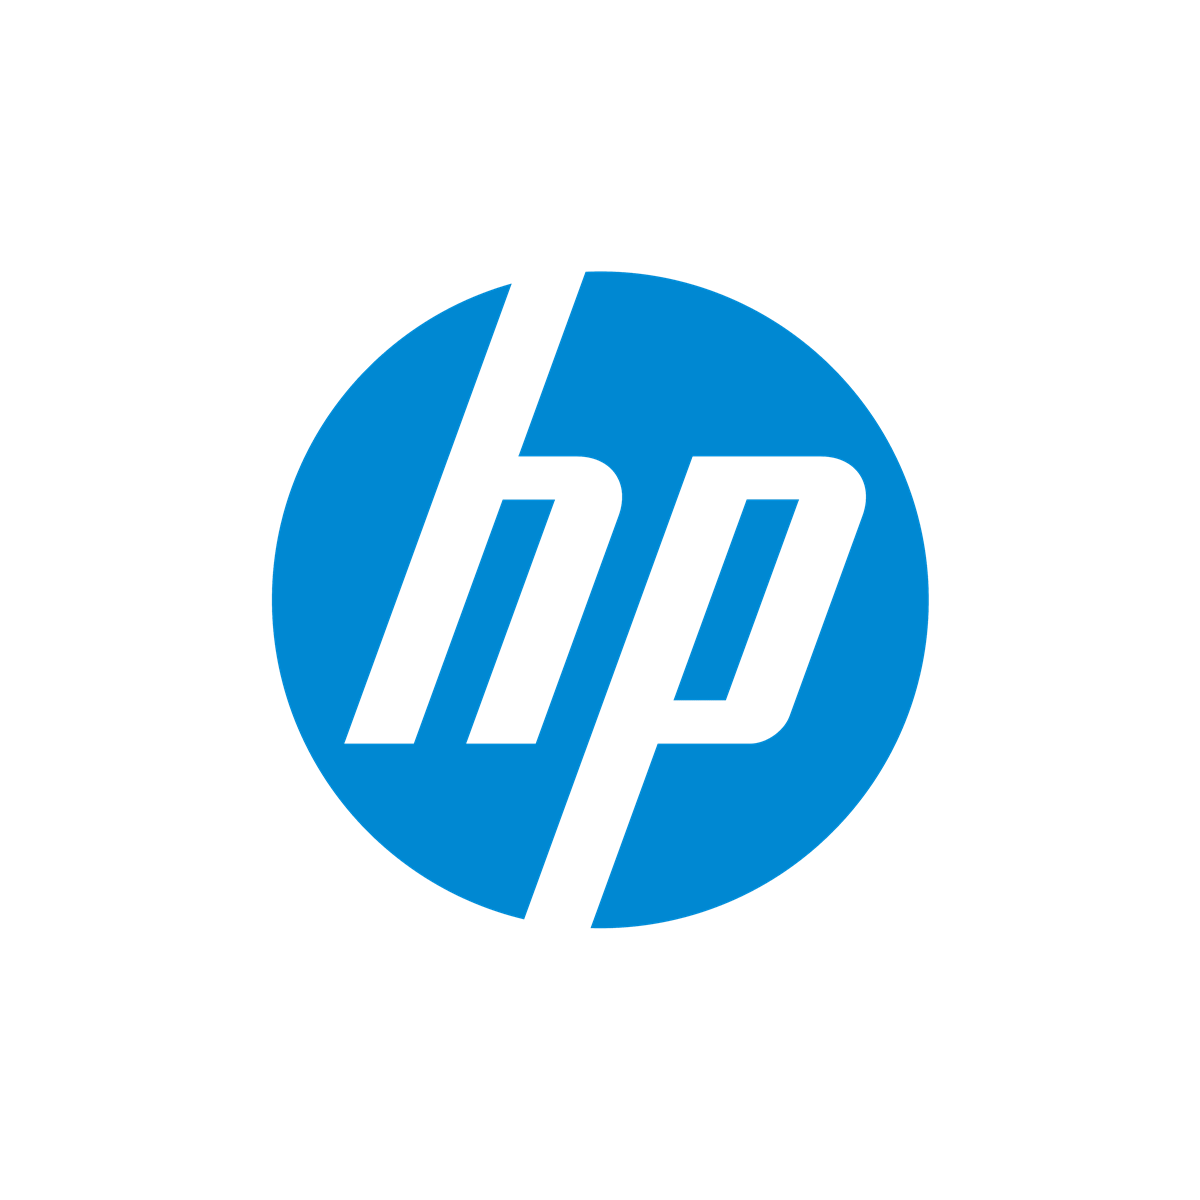 HP Pca-Formatter